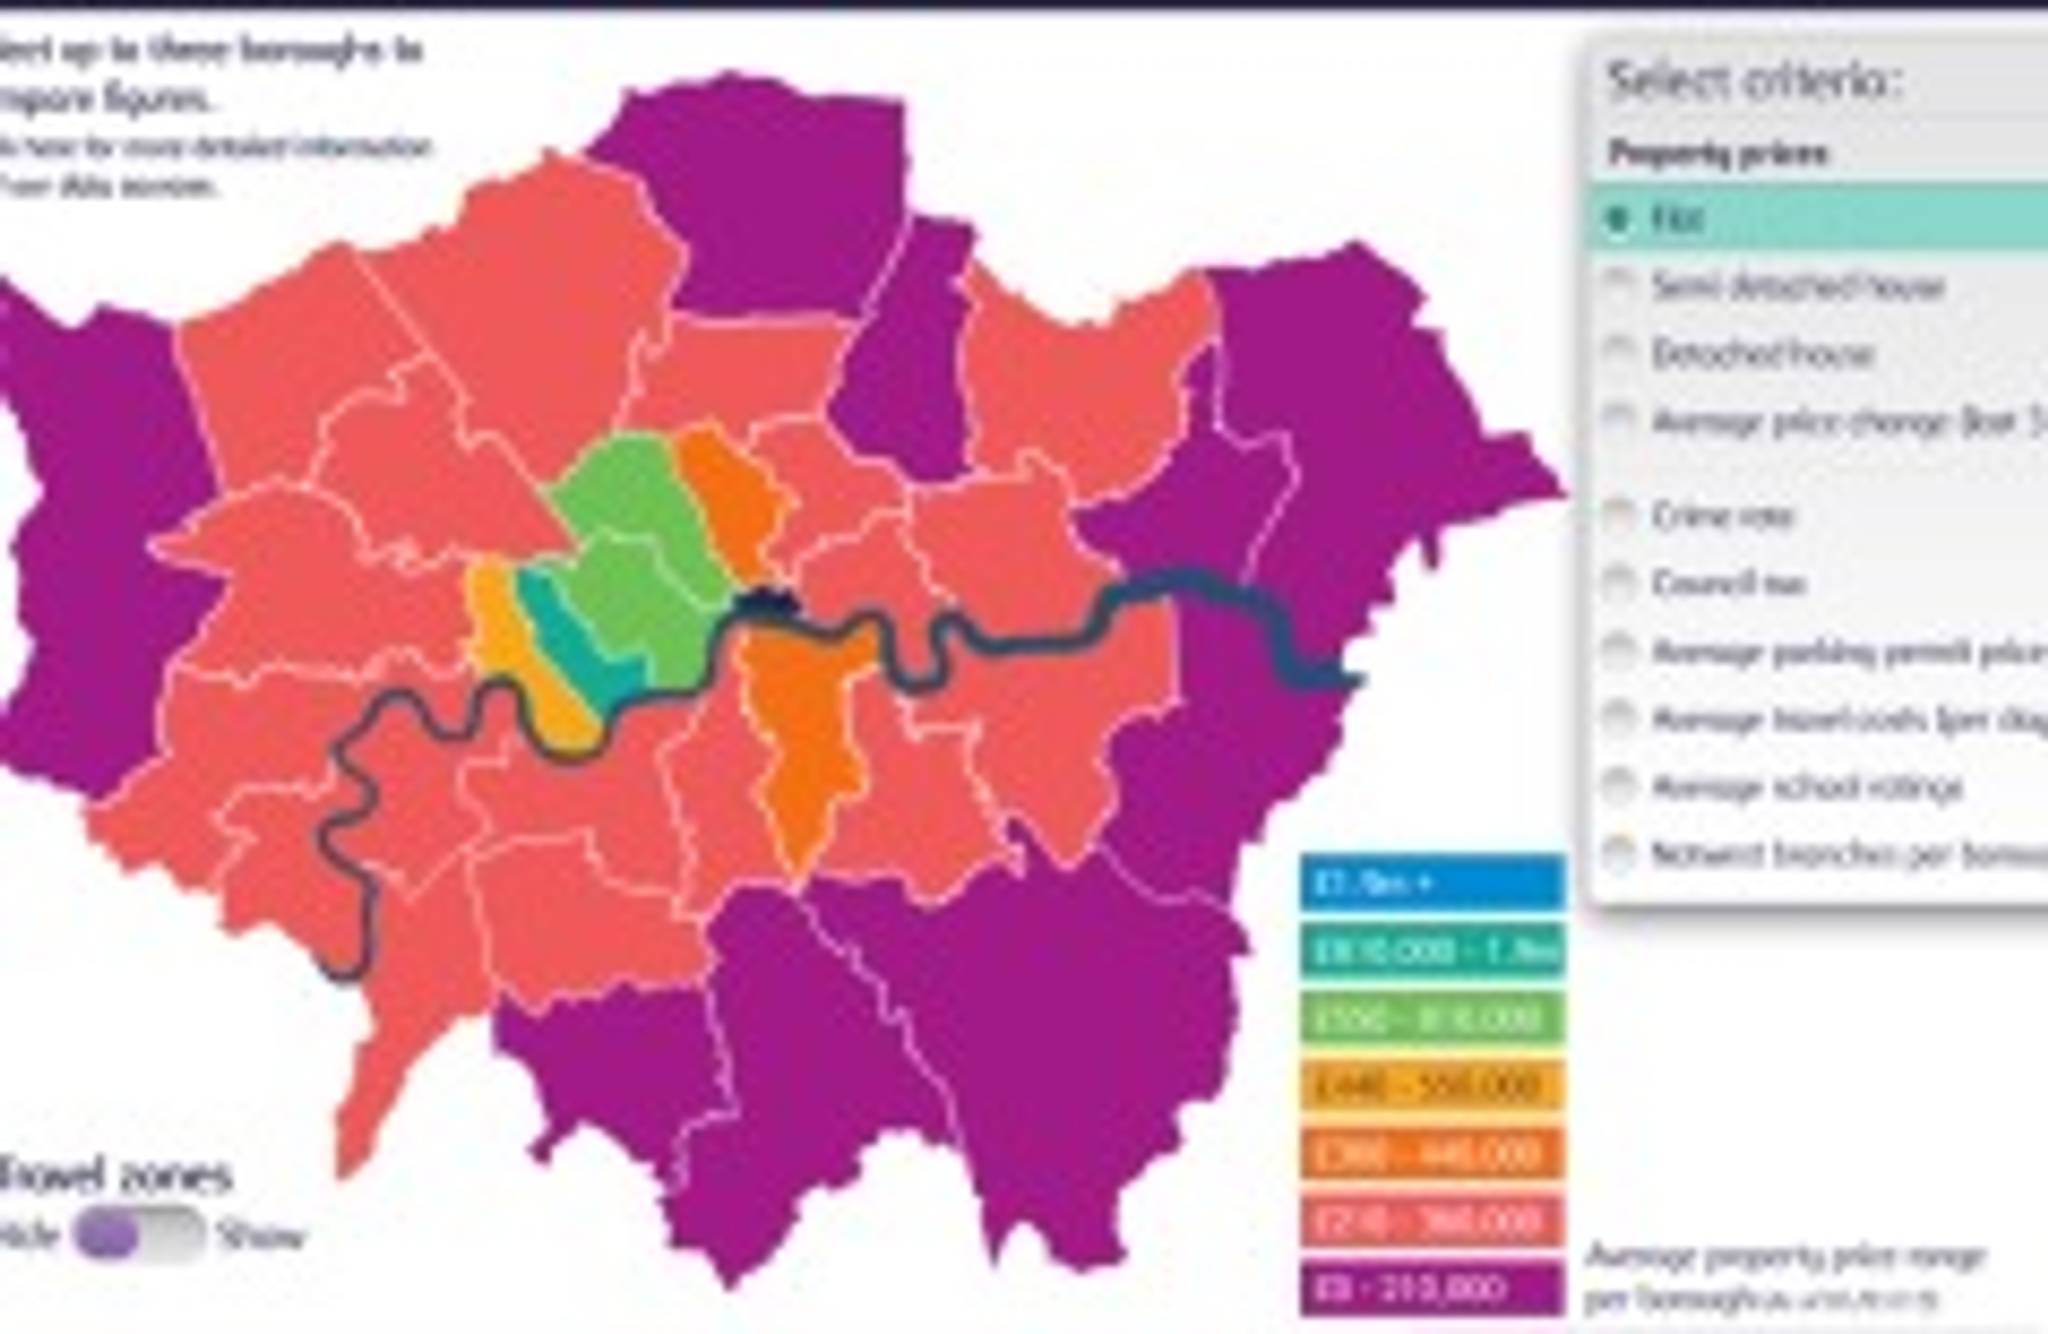 NatWest's London comparison tool